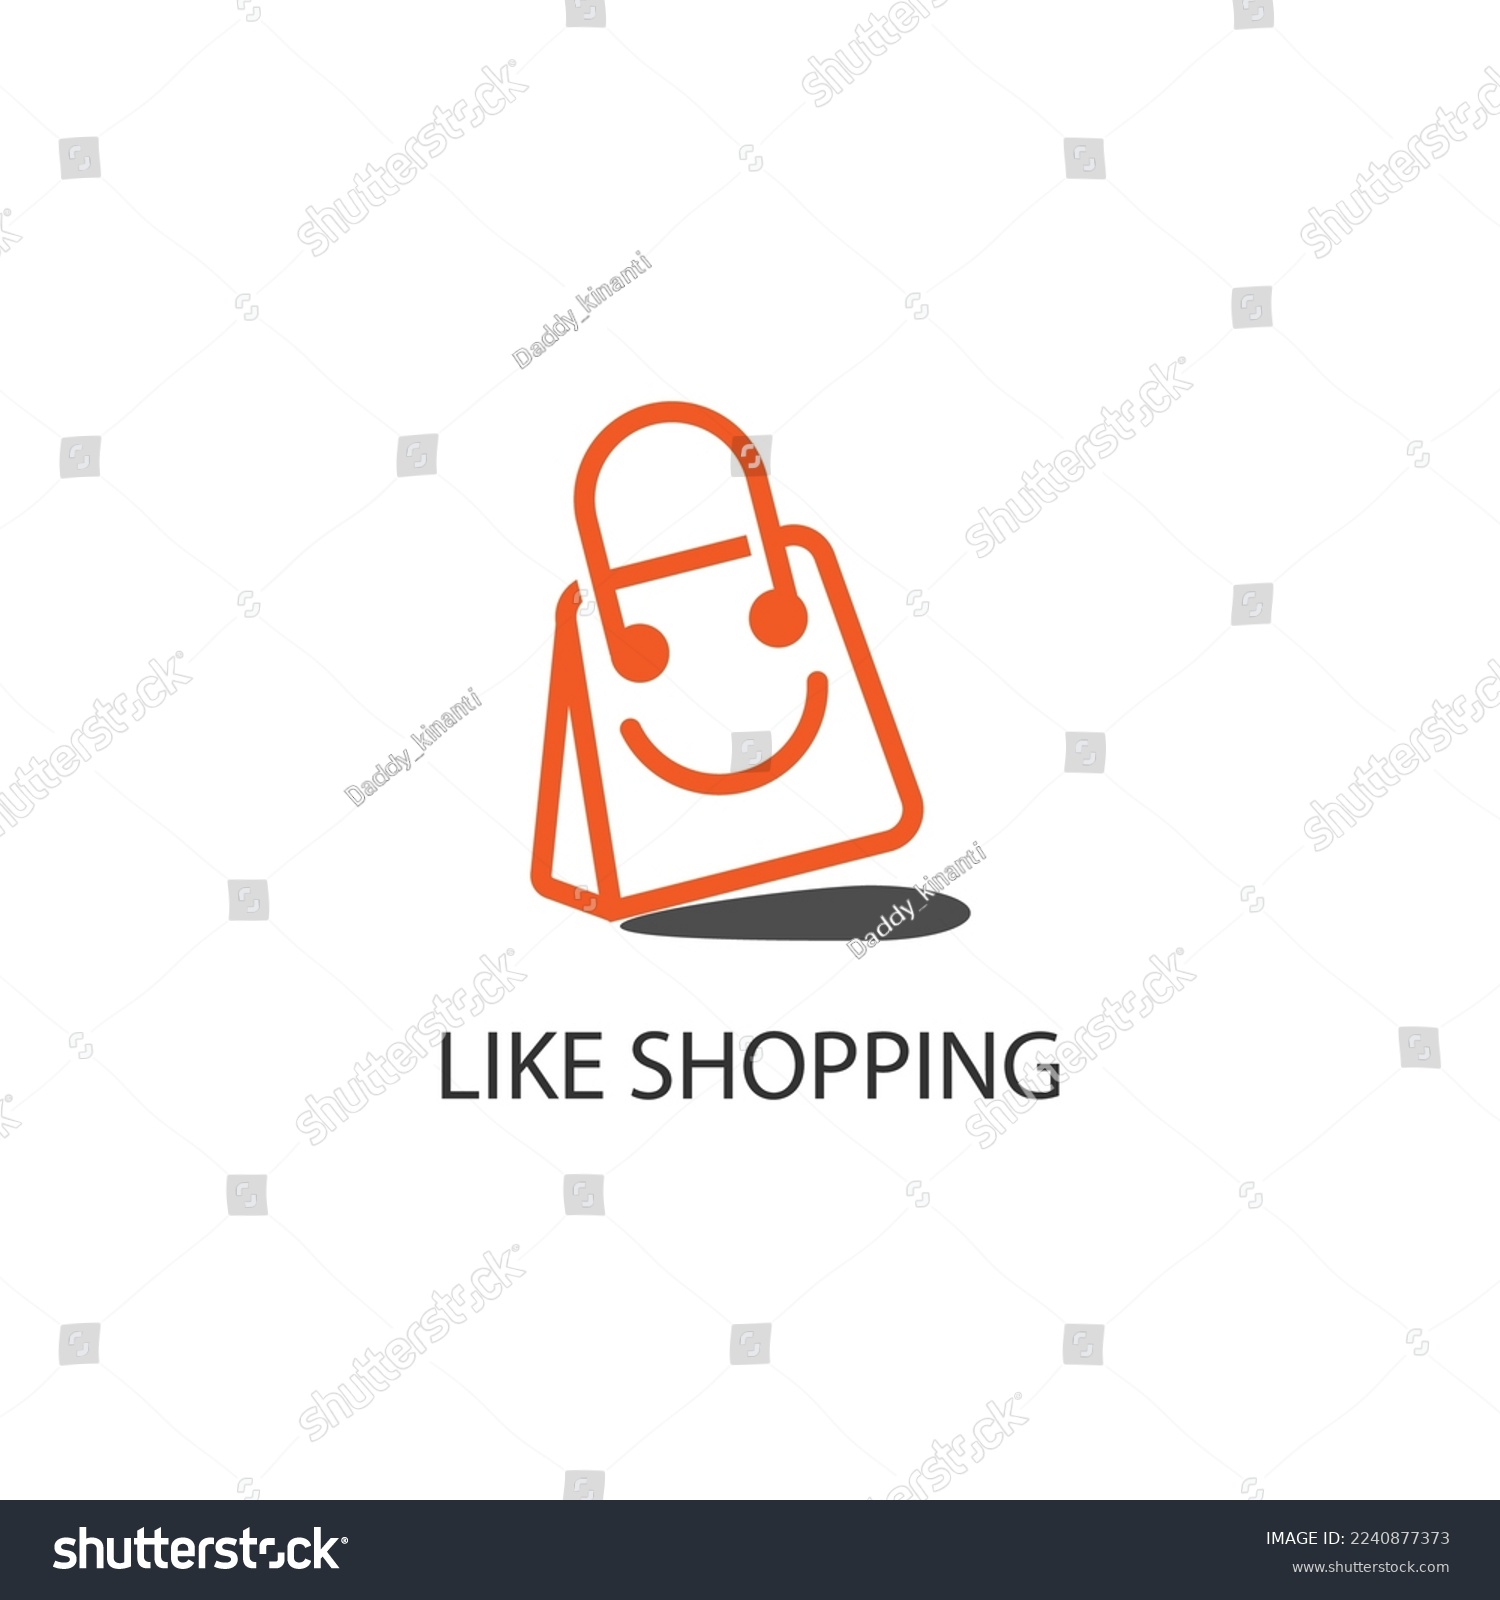 SVG of Like shopping concept logo. Illustration of shopping bag with emoji smile character. svg